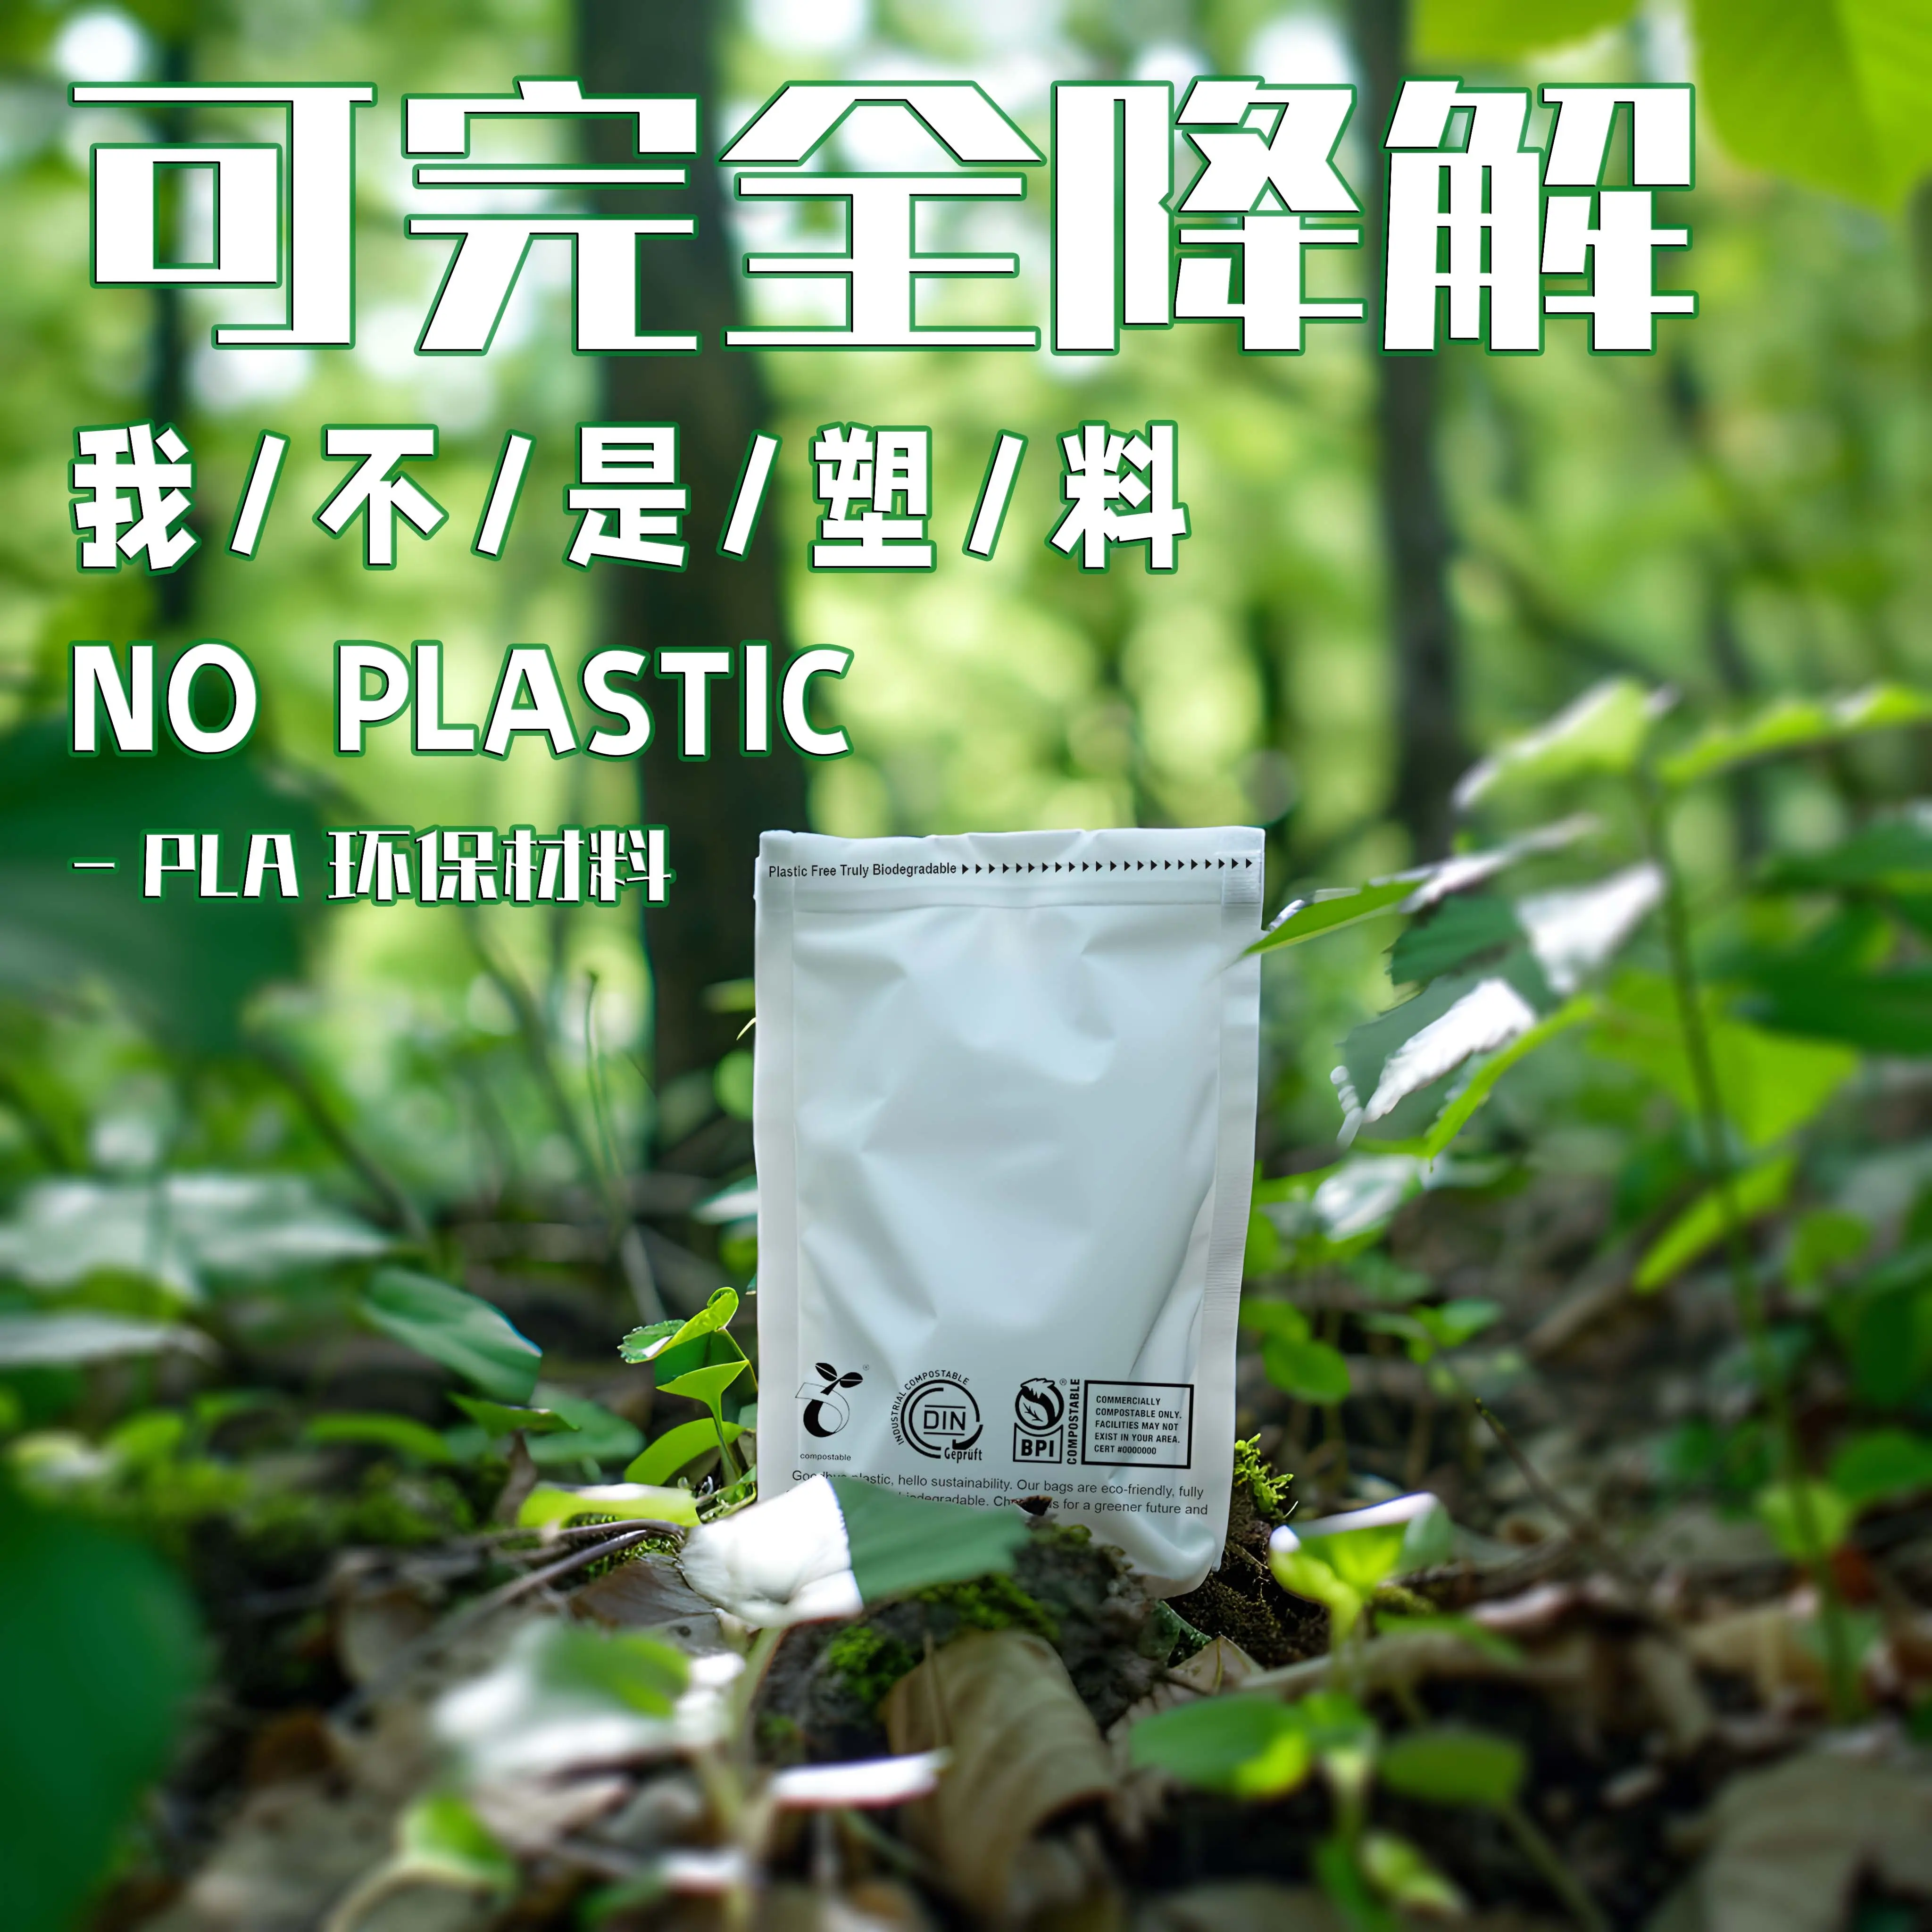 50 PCS Biodegradable Plastic Packaging Bags, PLA/Kraft Paper Ziplock Bags, Green packaging Corn Starch Material, Not Plastic3.5g